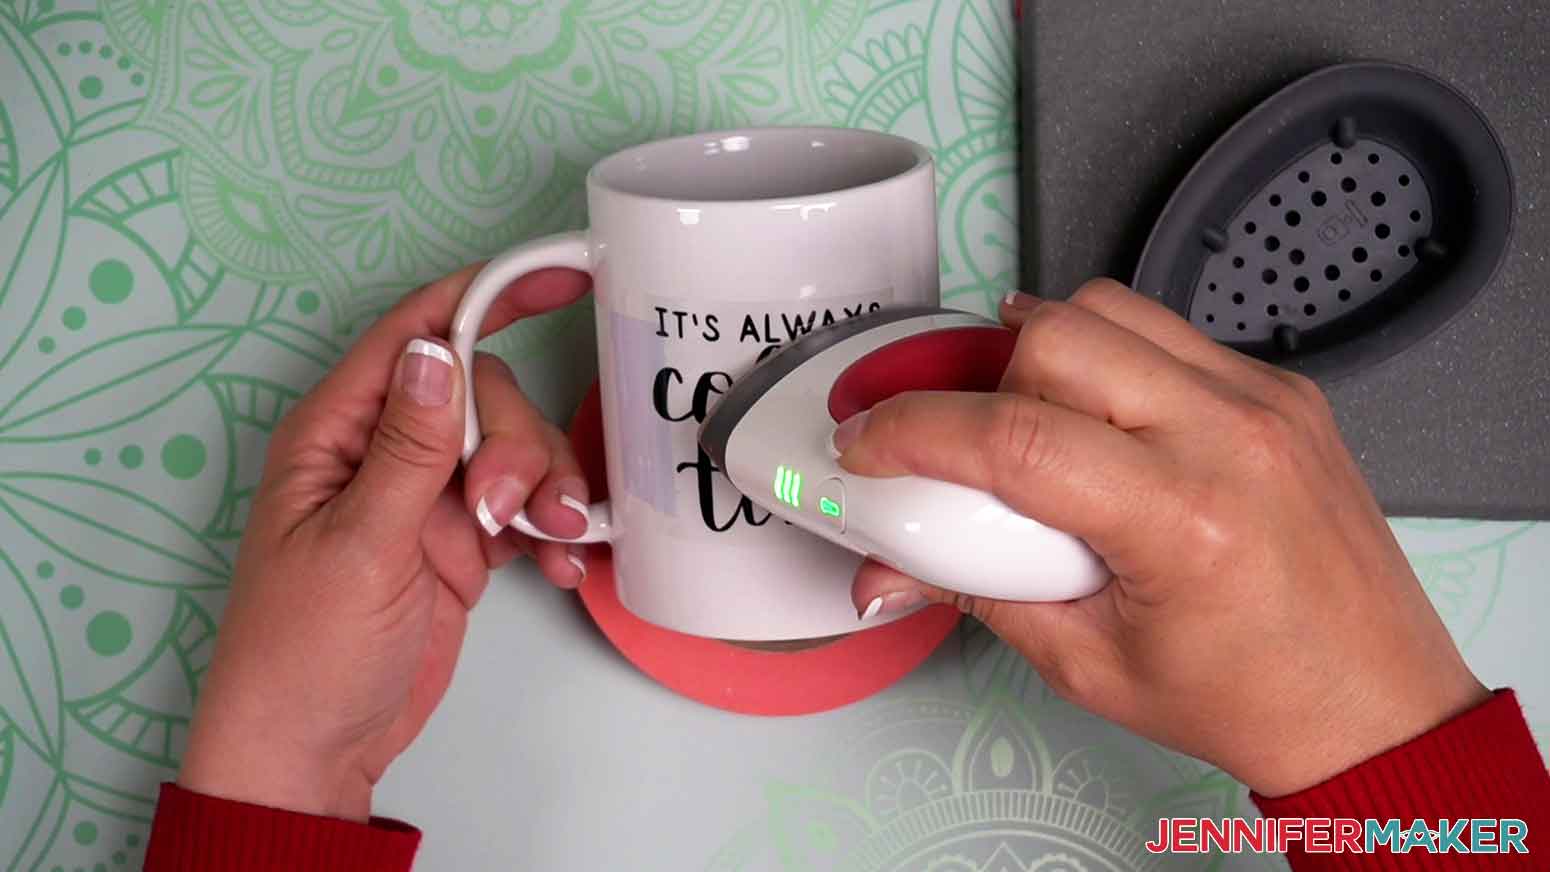 Use a Cricut EasyPress Mini on high heat to adhere the decal to the ceramic coffee mug.